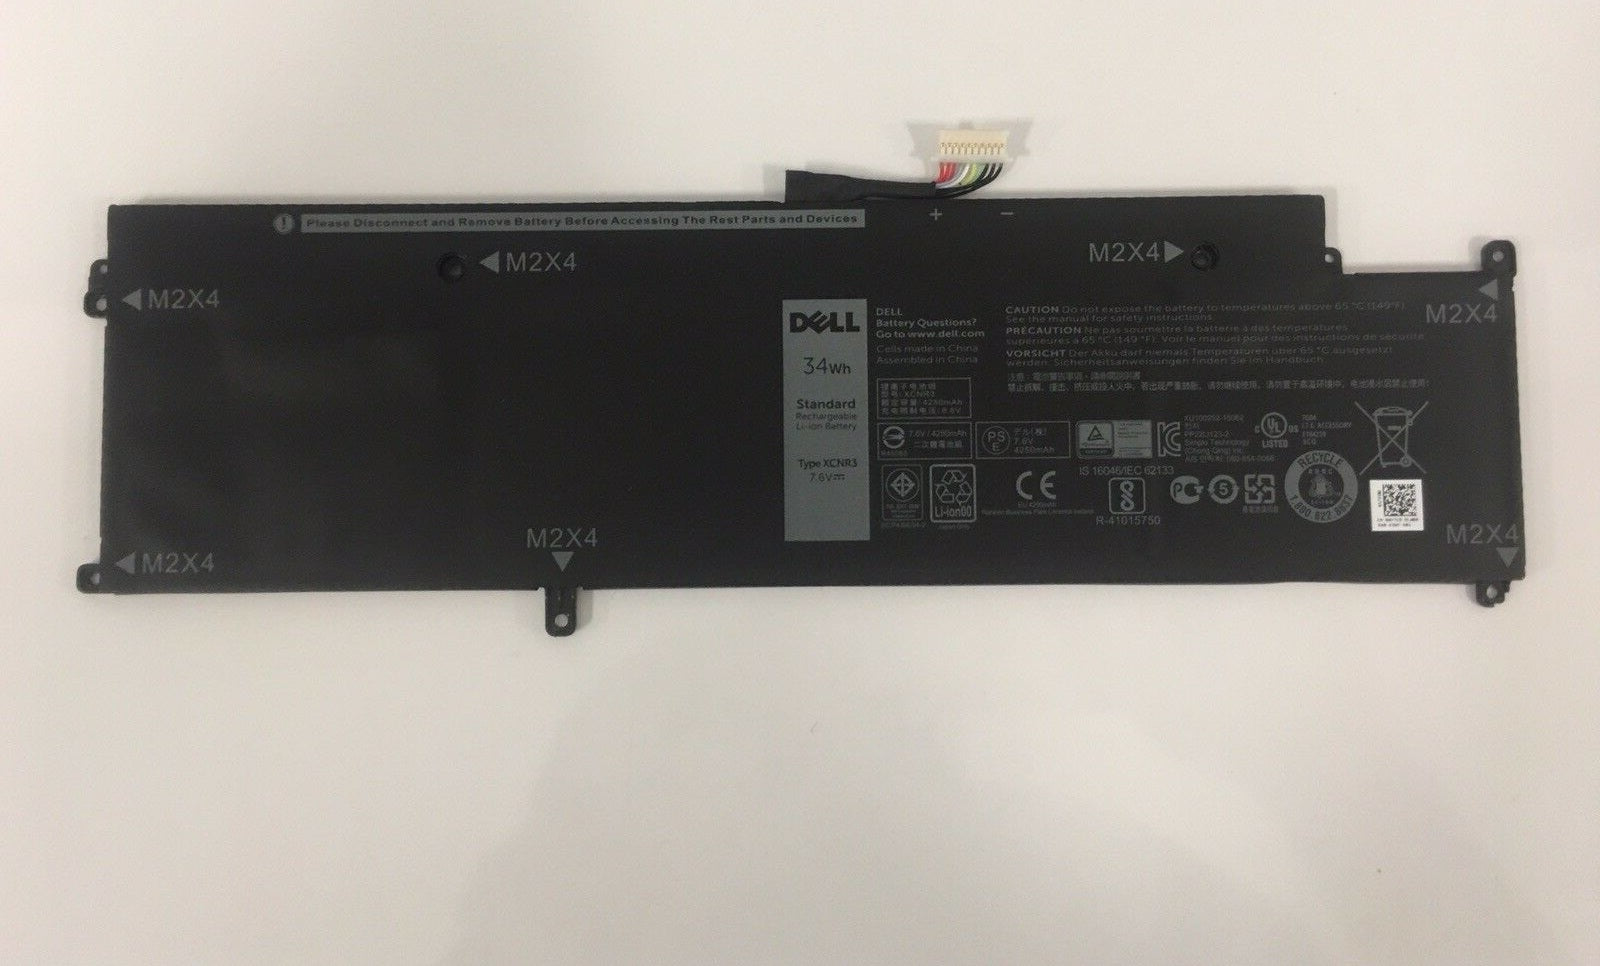 7.6V 34wh Original XCNR3 Dell Latitude 13 7370 Ultrabook WV7CG 0WV7CG Laptop Battery - eBuy UAE